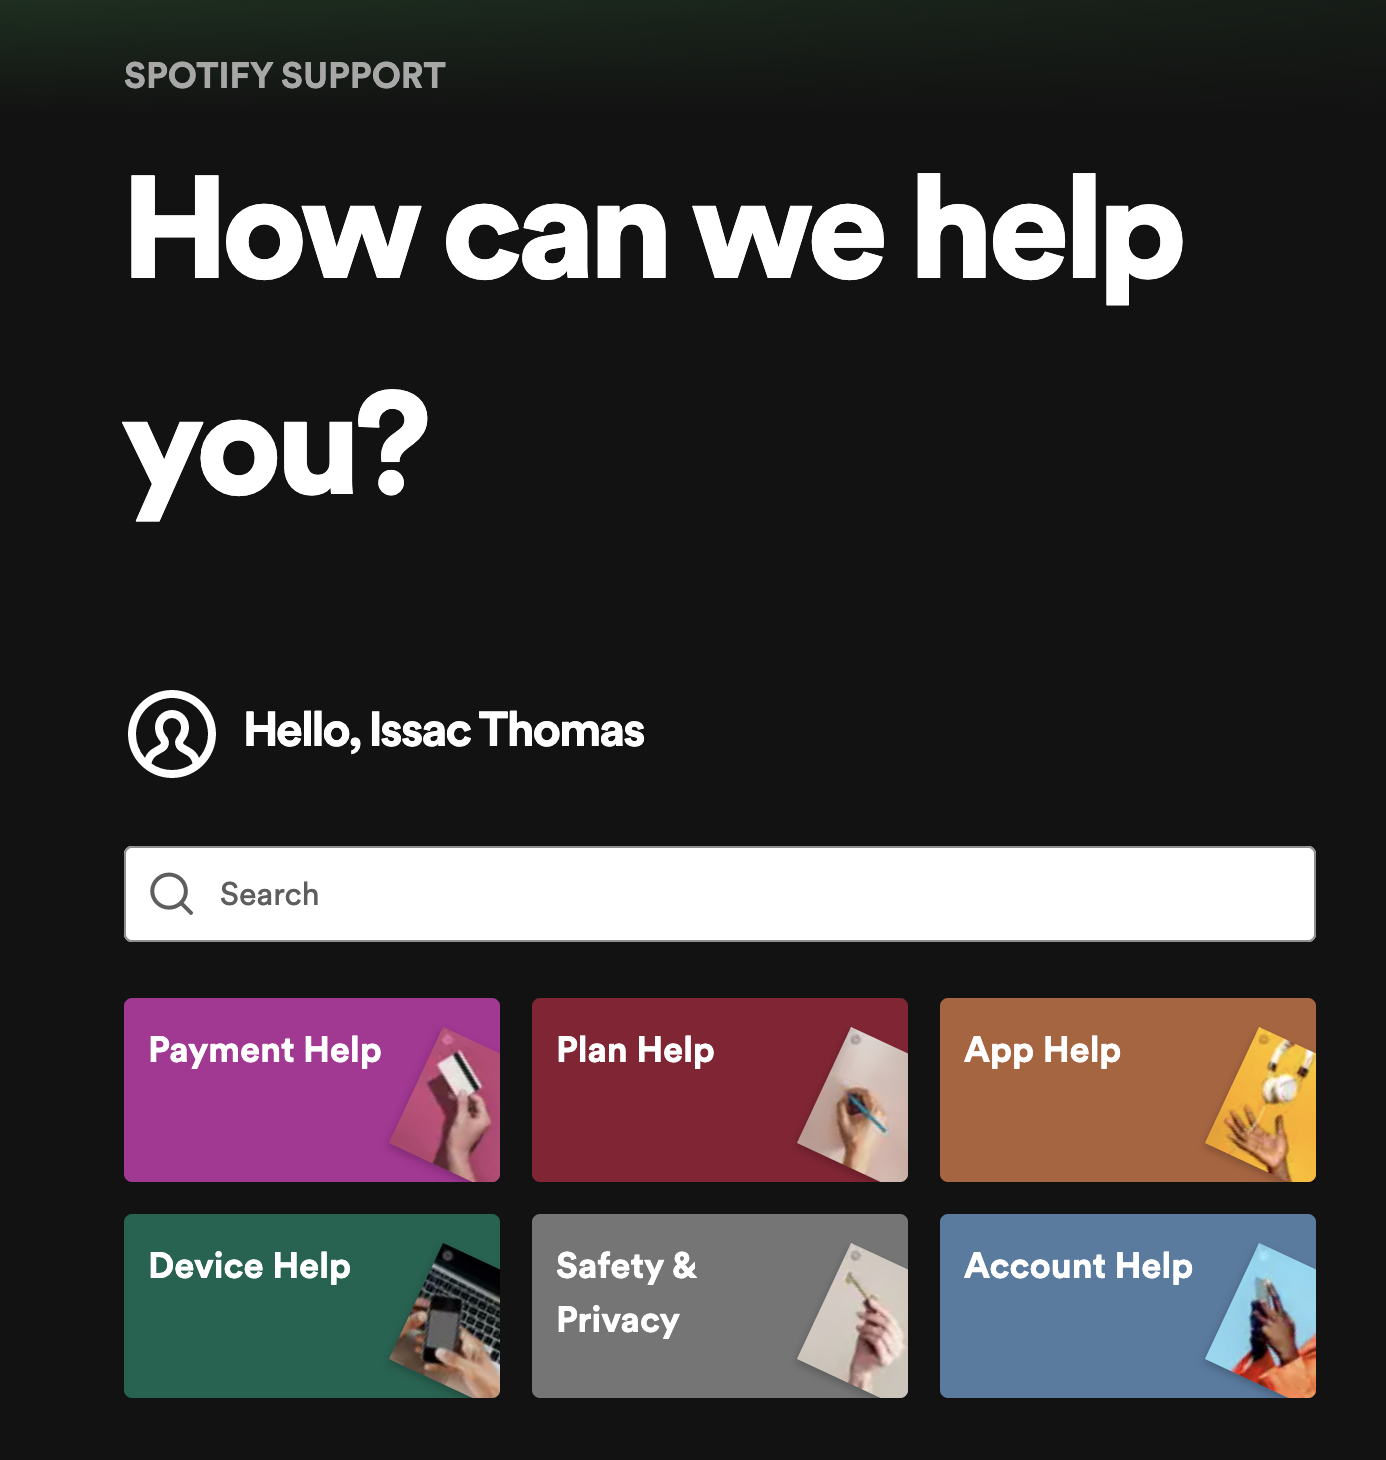 Spotify customer self-service knowledge base